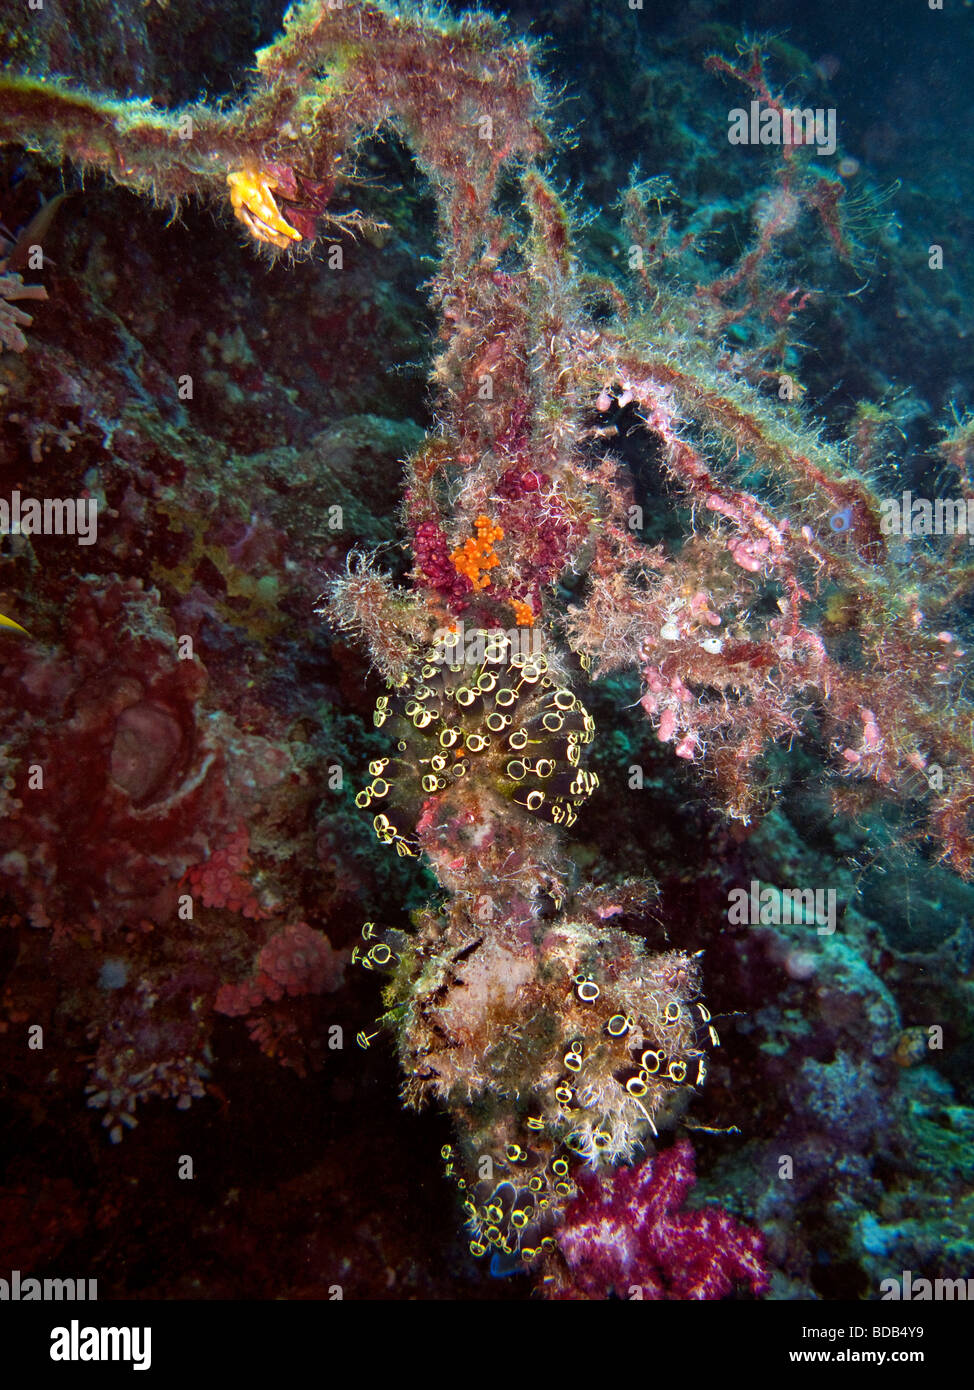 Indonesia Sulawesi Wakatobi National Park Hoga Island underwater colonisation of mooring rope by anemones and corals Stock Photo